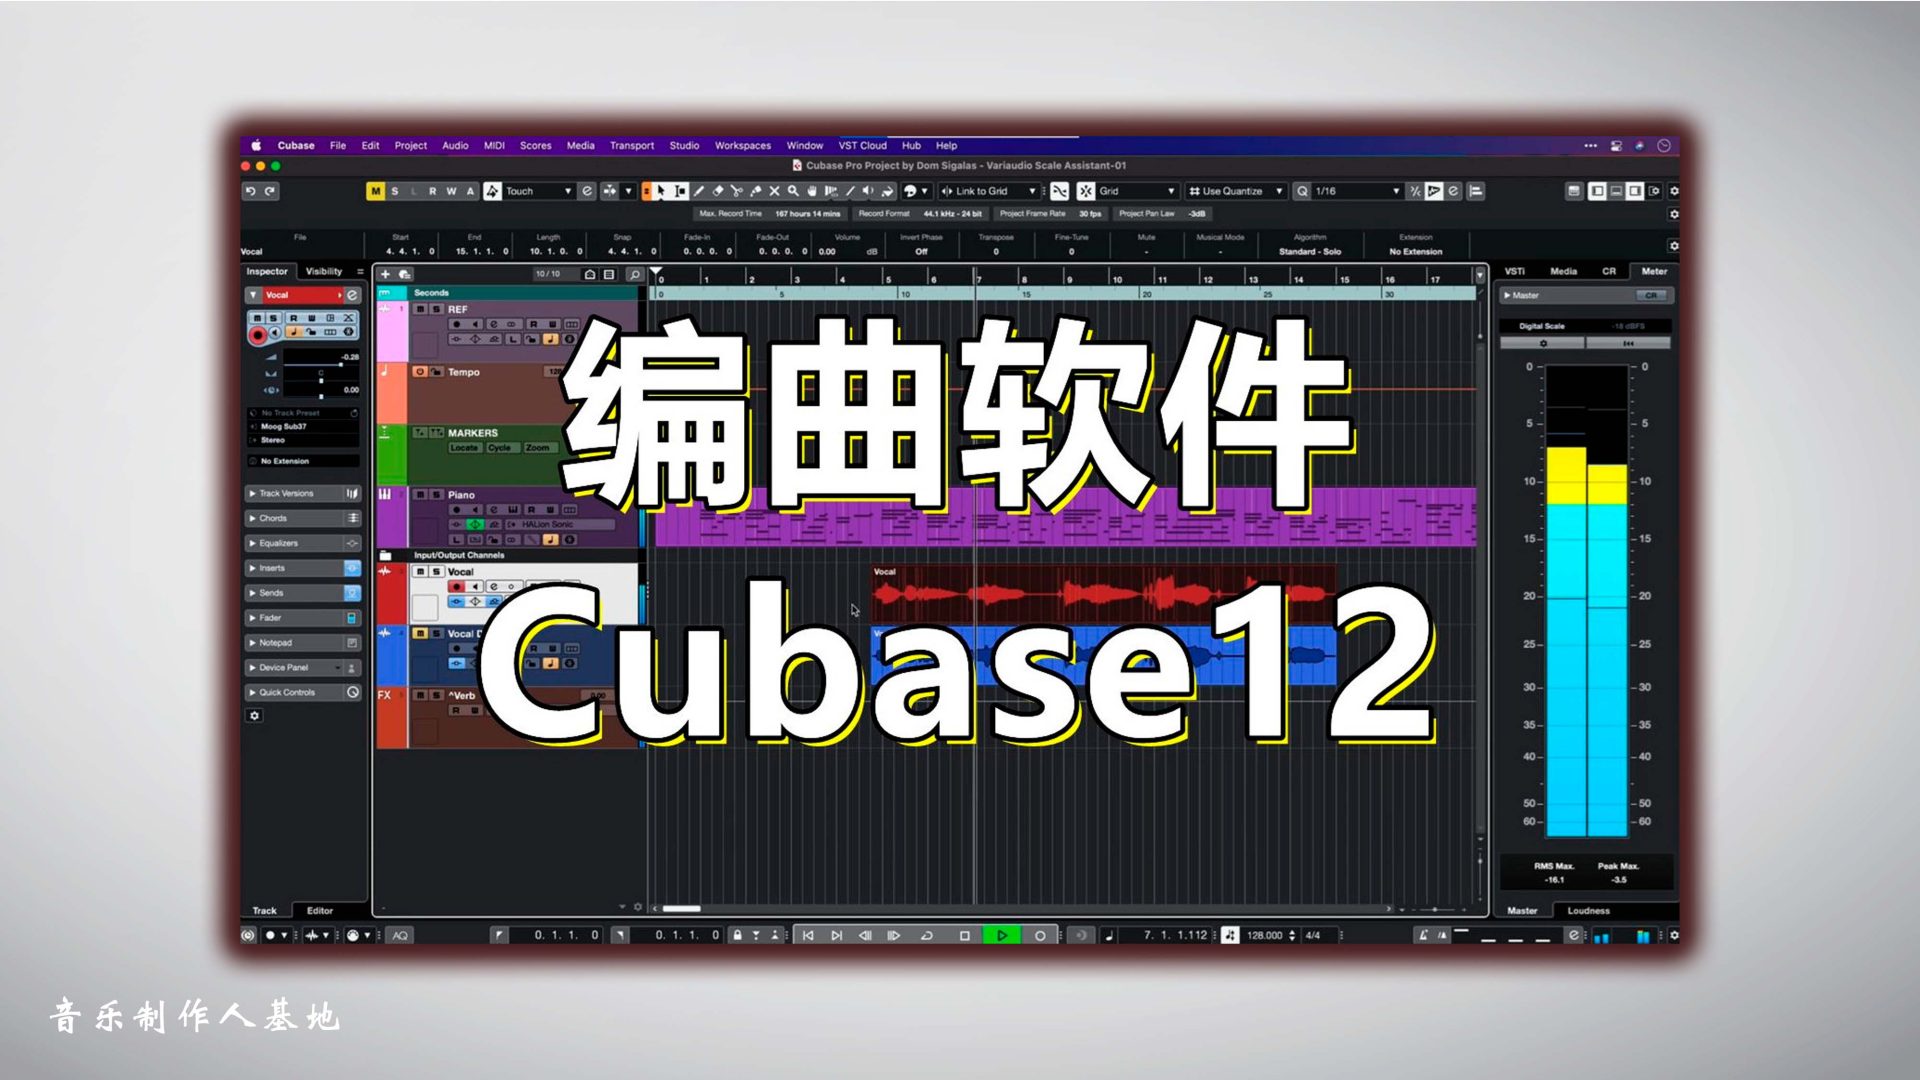 Cubase12 Pro 完整版 Windows 包含音色库插件, Cubase12 Pro音乐制作编曲混音软件【Cubase软件+Cubase乐器音源插件】